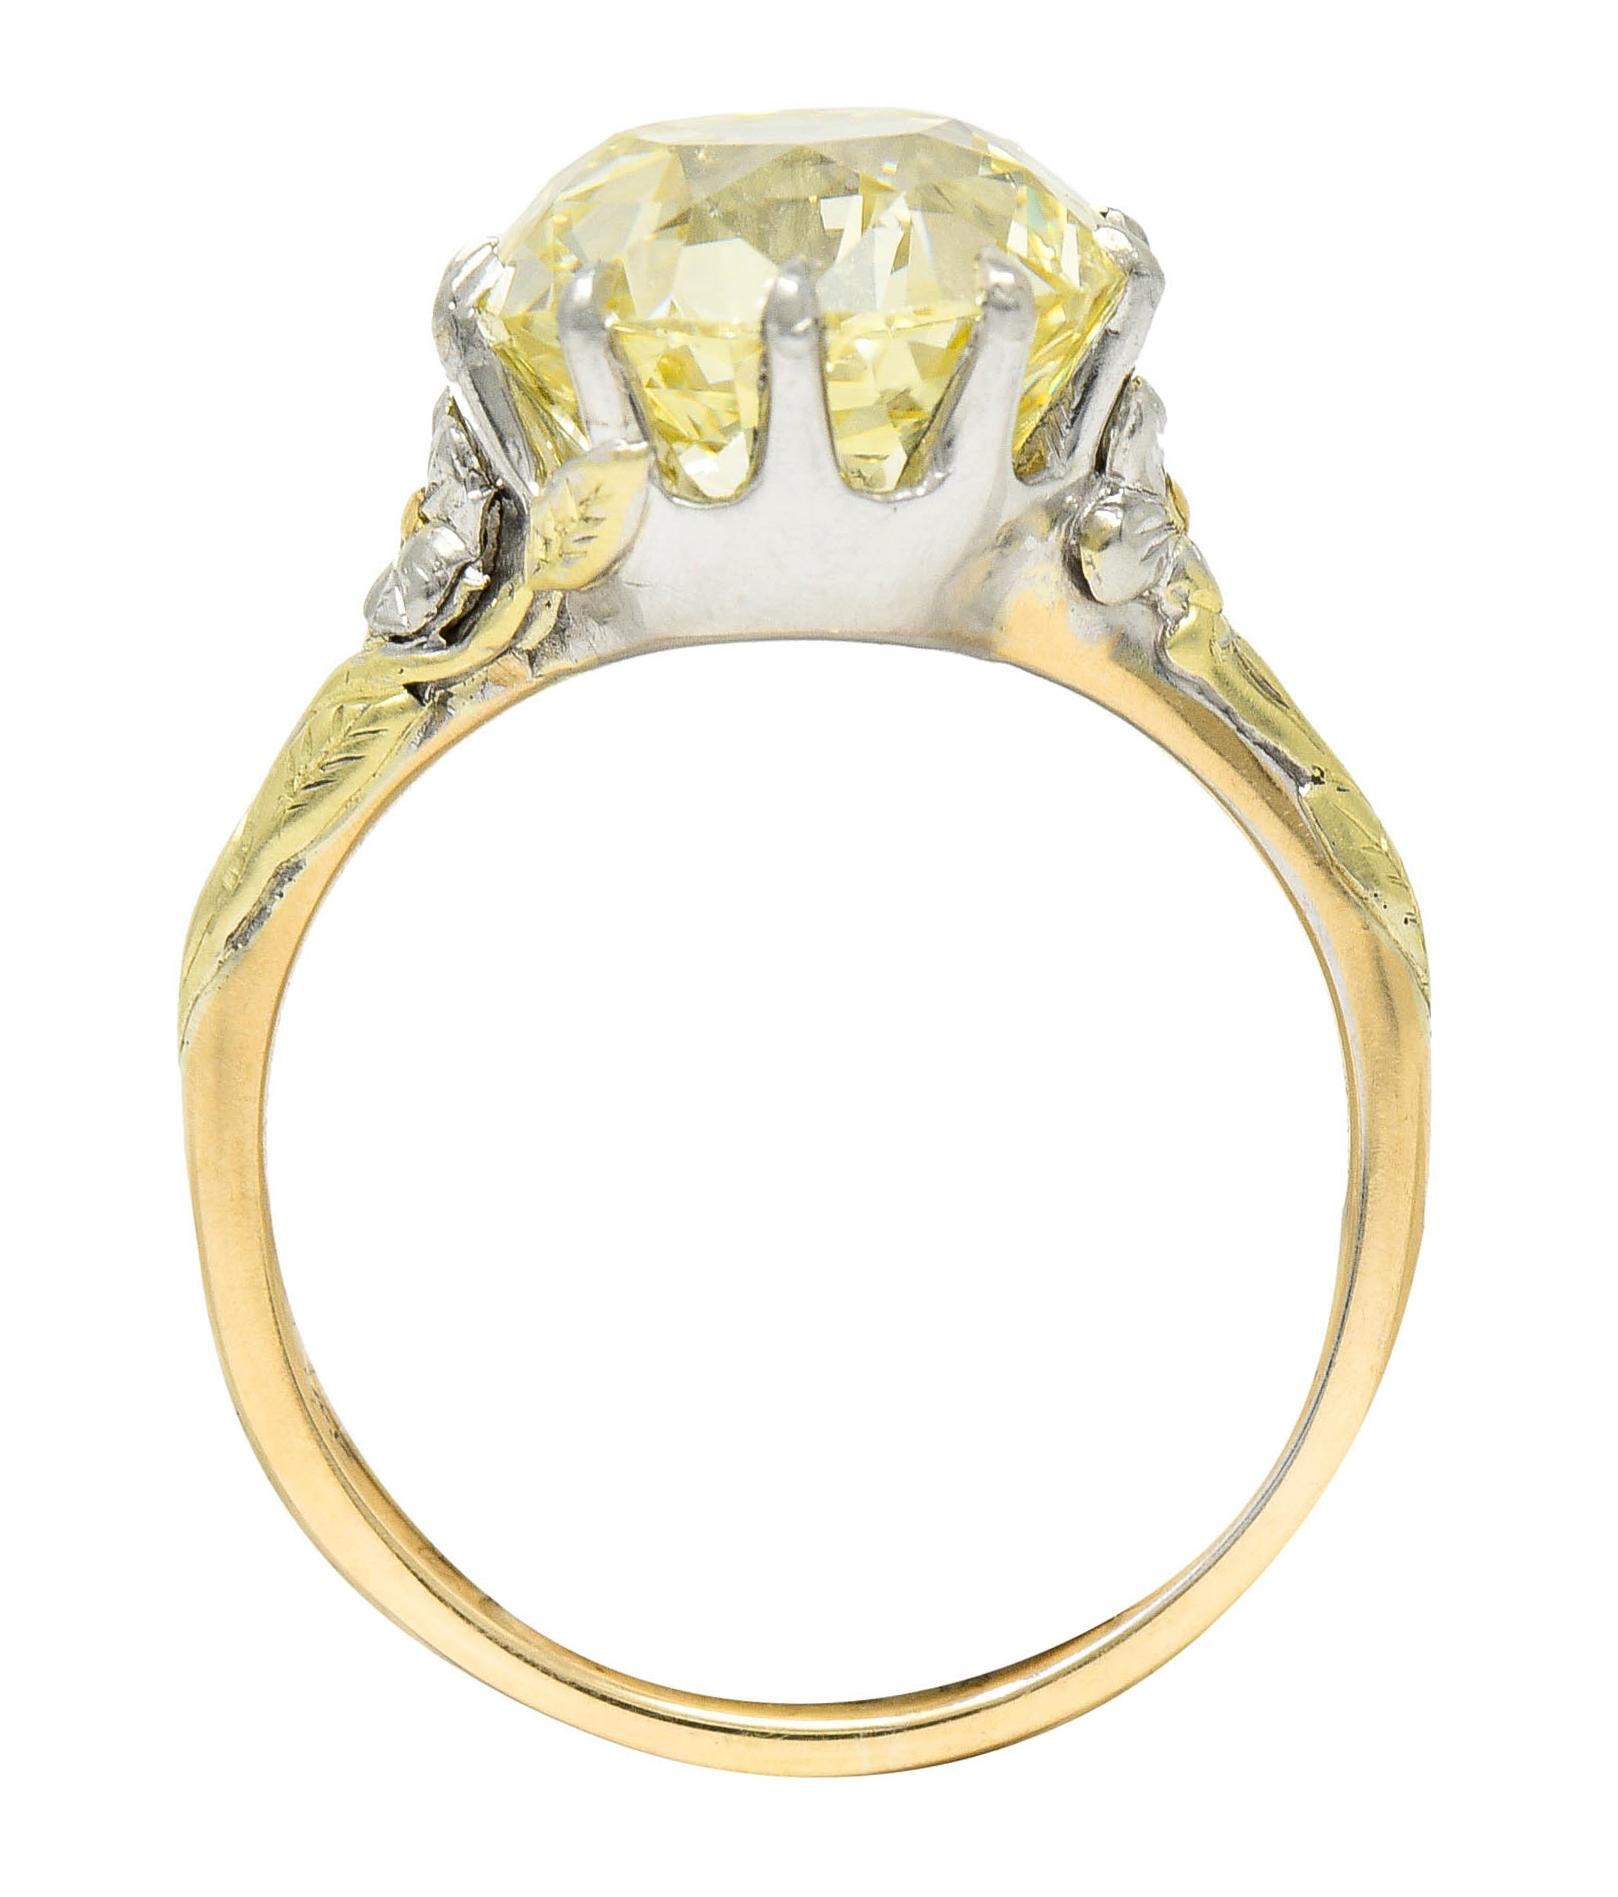 Brilliant Cut Arts & Crafts 7.12 Carats Fancy Yellow Diamond 14 Karat Tri-Colored Gold Ring